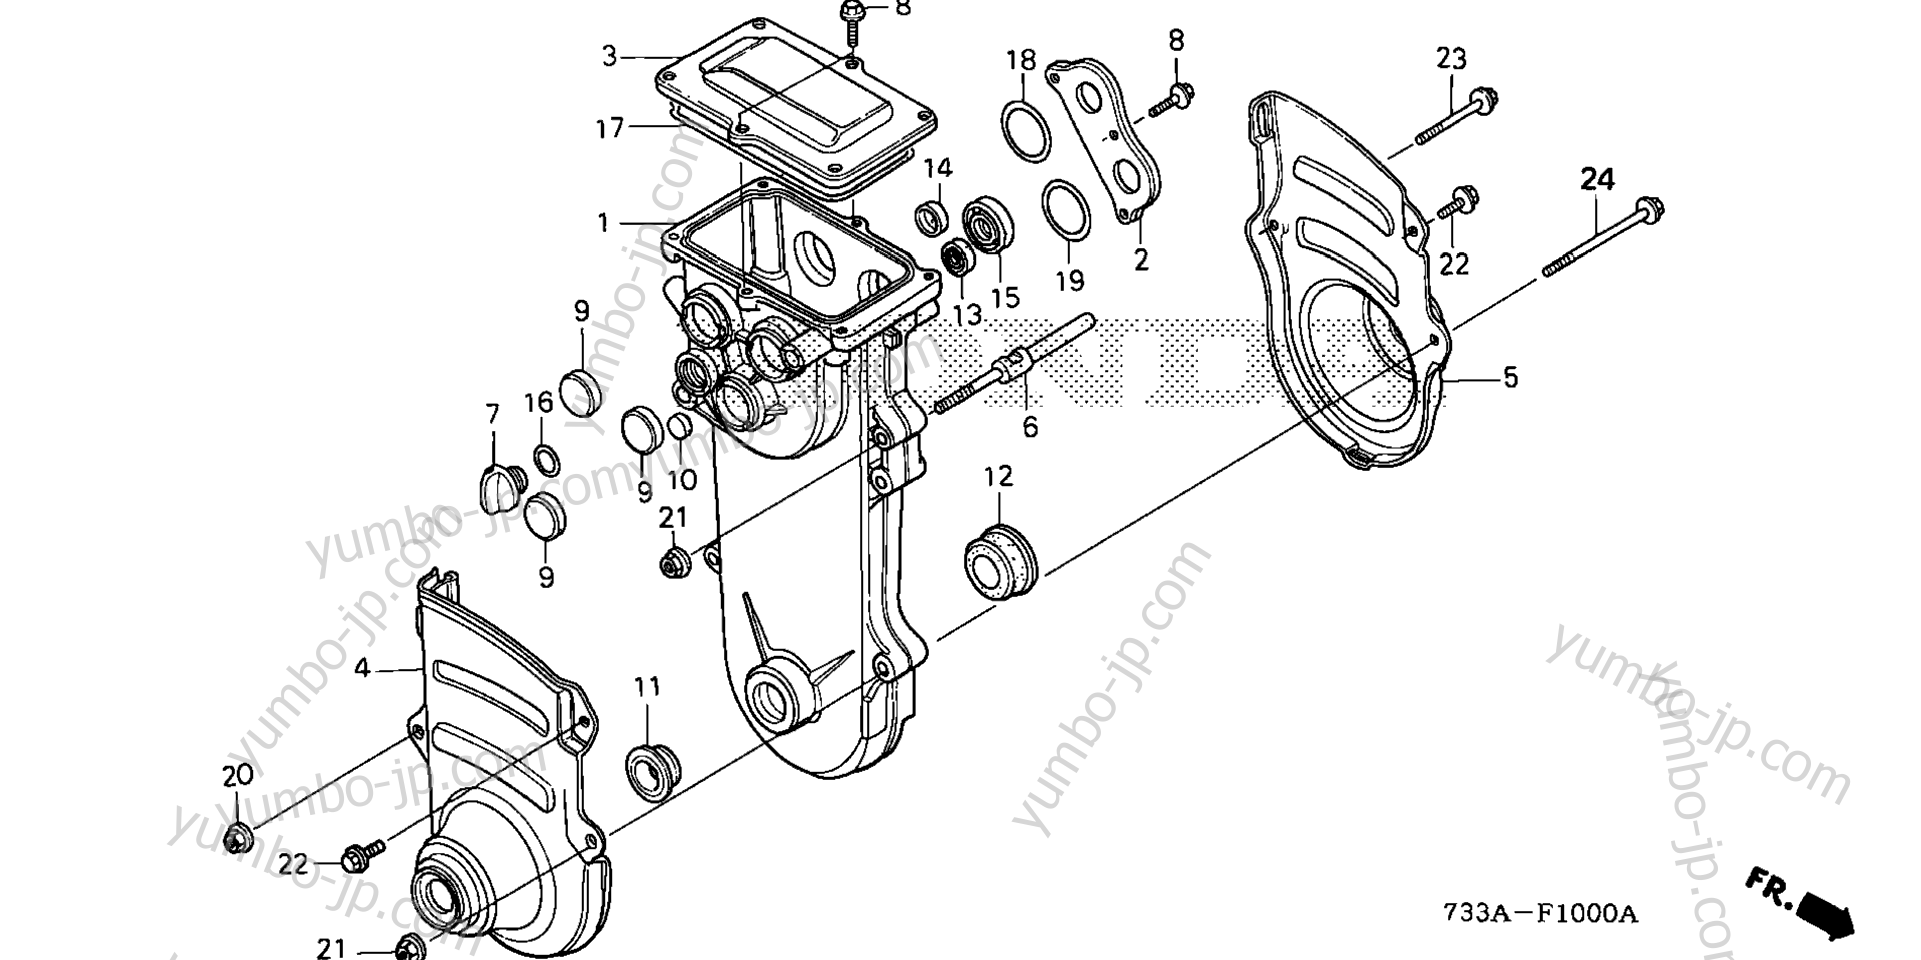 YUMBO | spare parts catalog for культиватора HONDA F501 A2